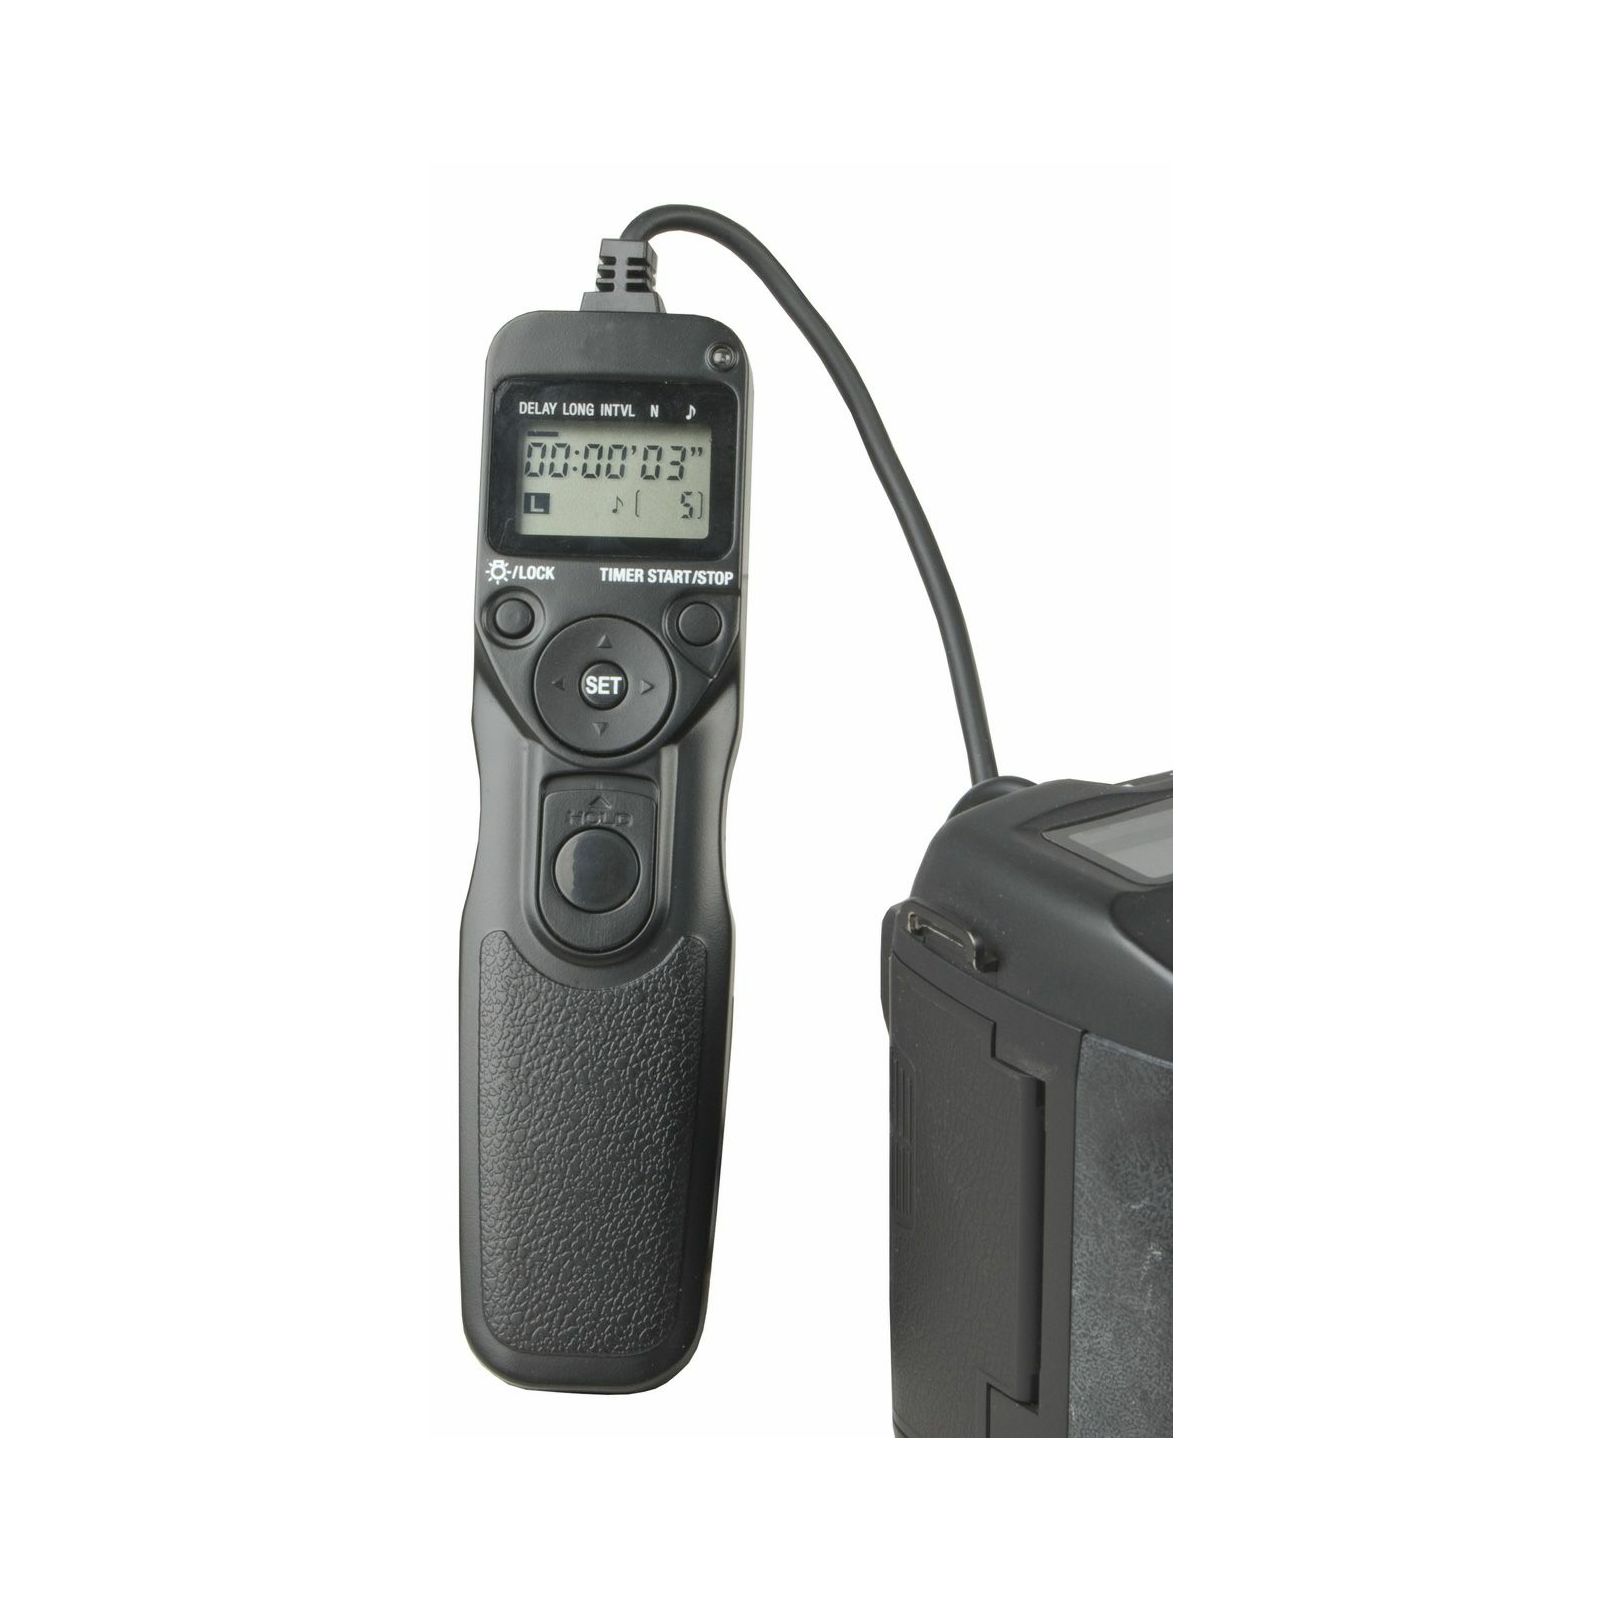 Bilora FB4-N3 Digital Timer Remote Control N3 žičani daljinski okidač s intervalometrom timelapse za Nikon D750, D500, D610, D600, D7200, D5600, D5500, D5300, D3400, D3300, D7100, D5100, D3200, D500